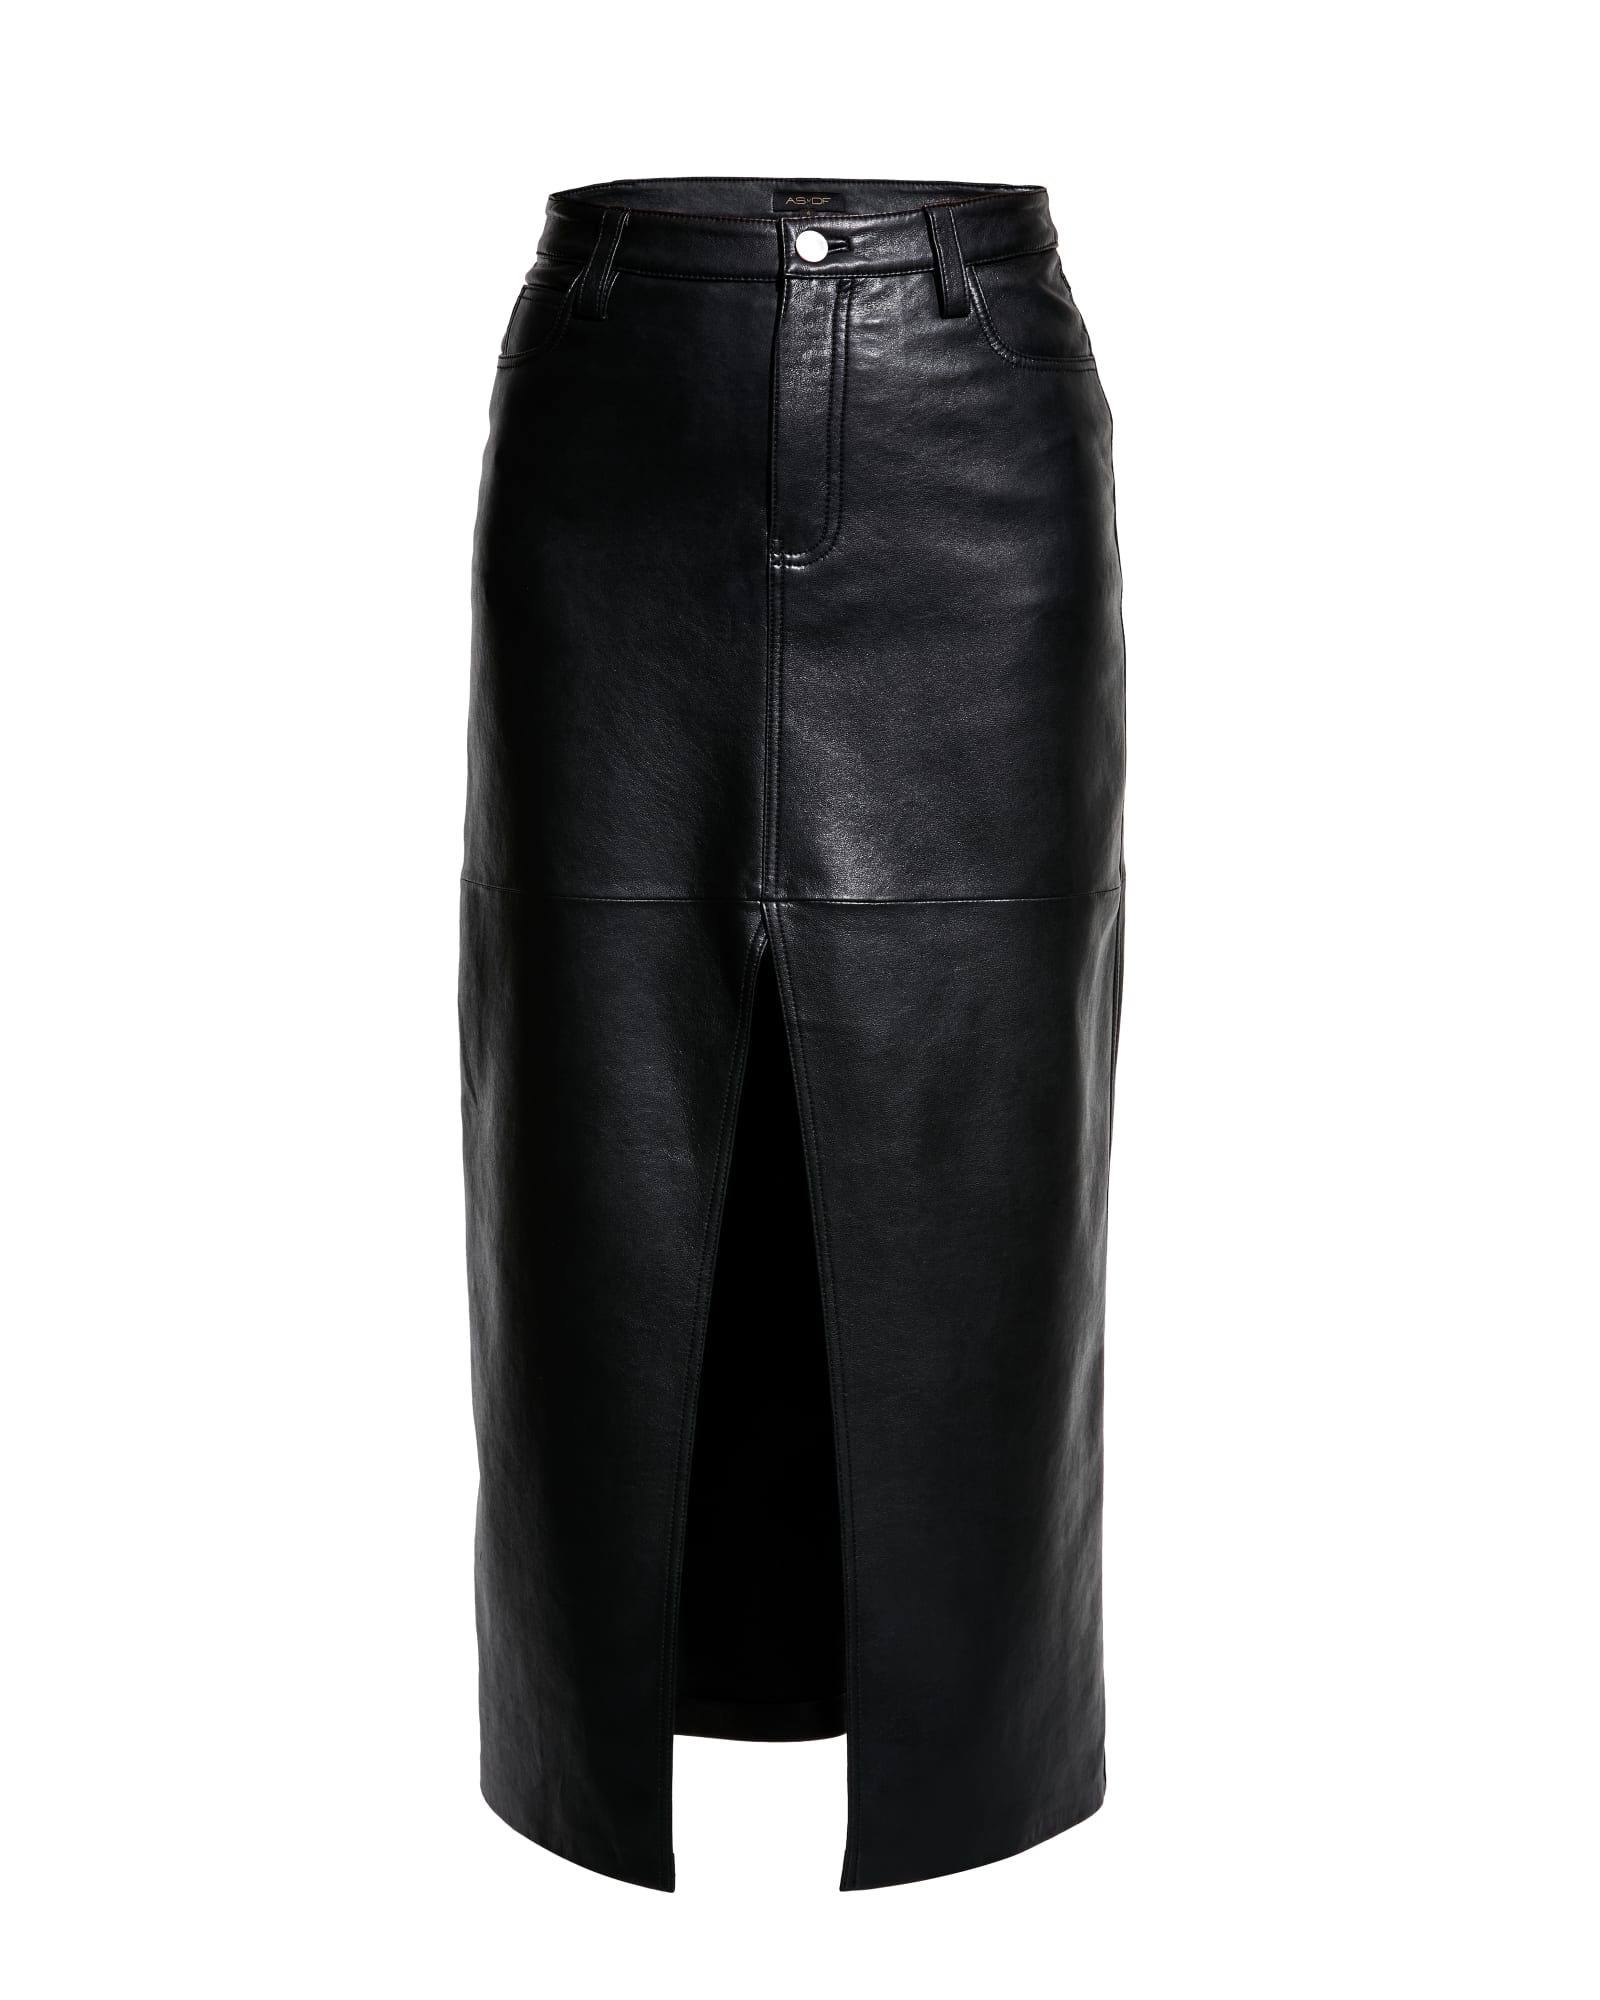 Imogen Recycled Leather Skirt | Black